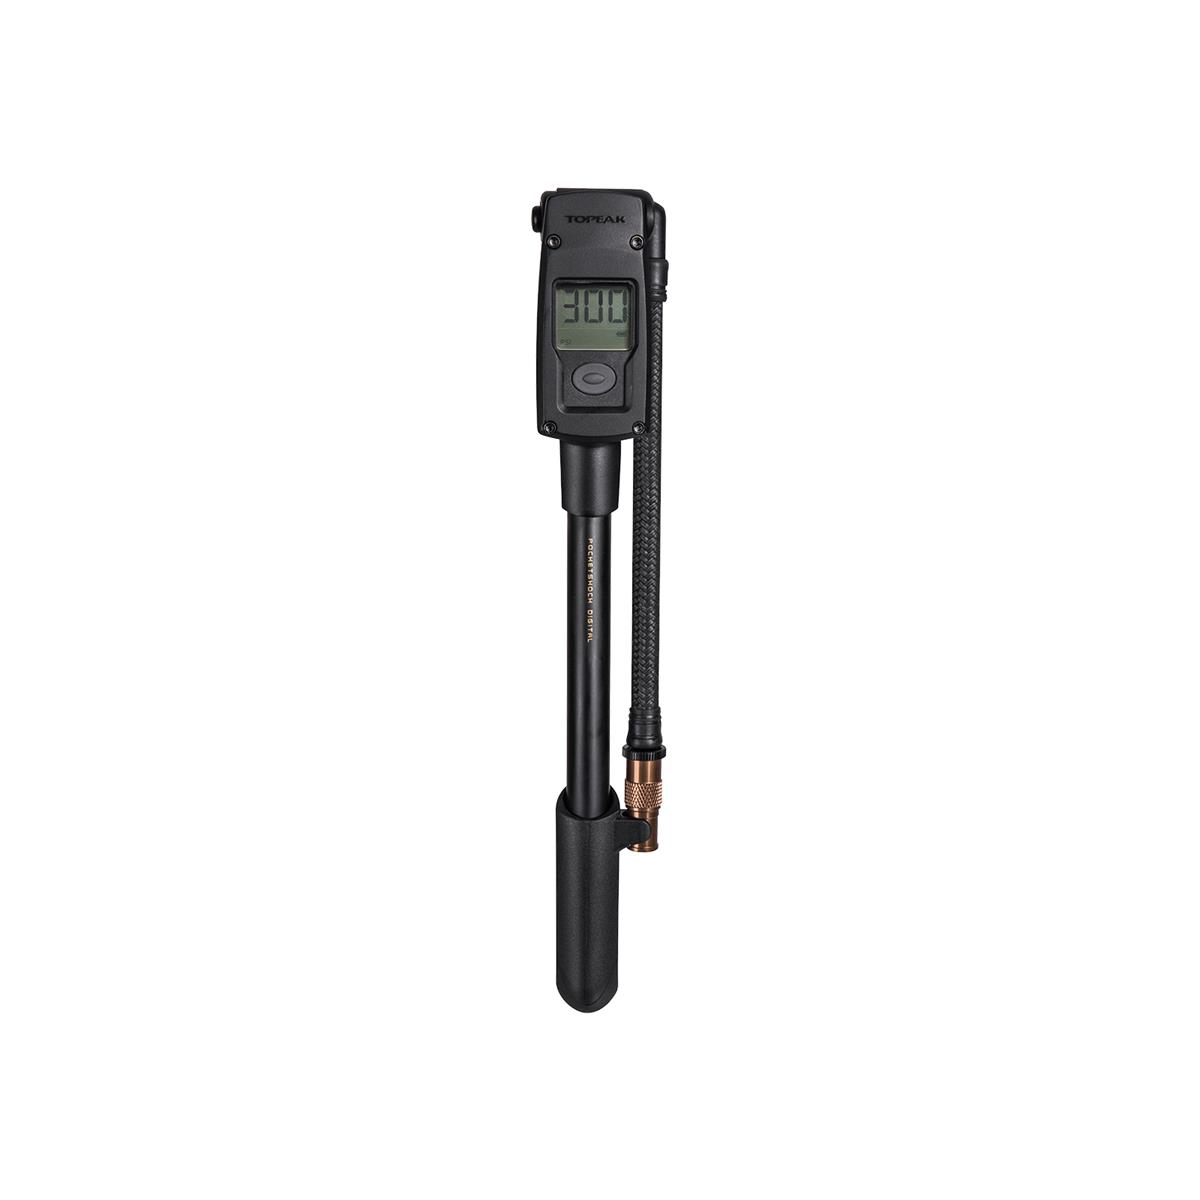 Topeak Dämpferpumpe Pocket Shock Digital mit Manometer